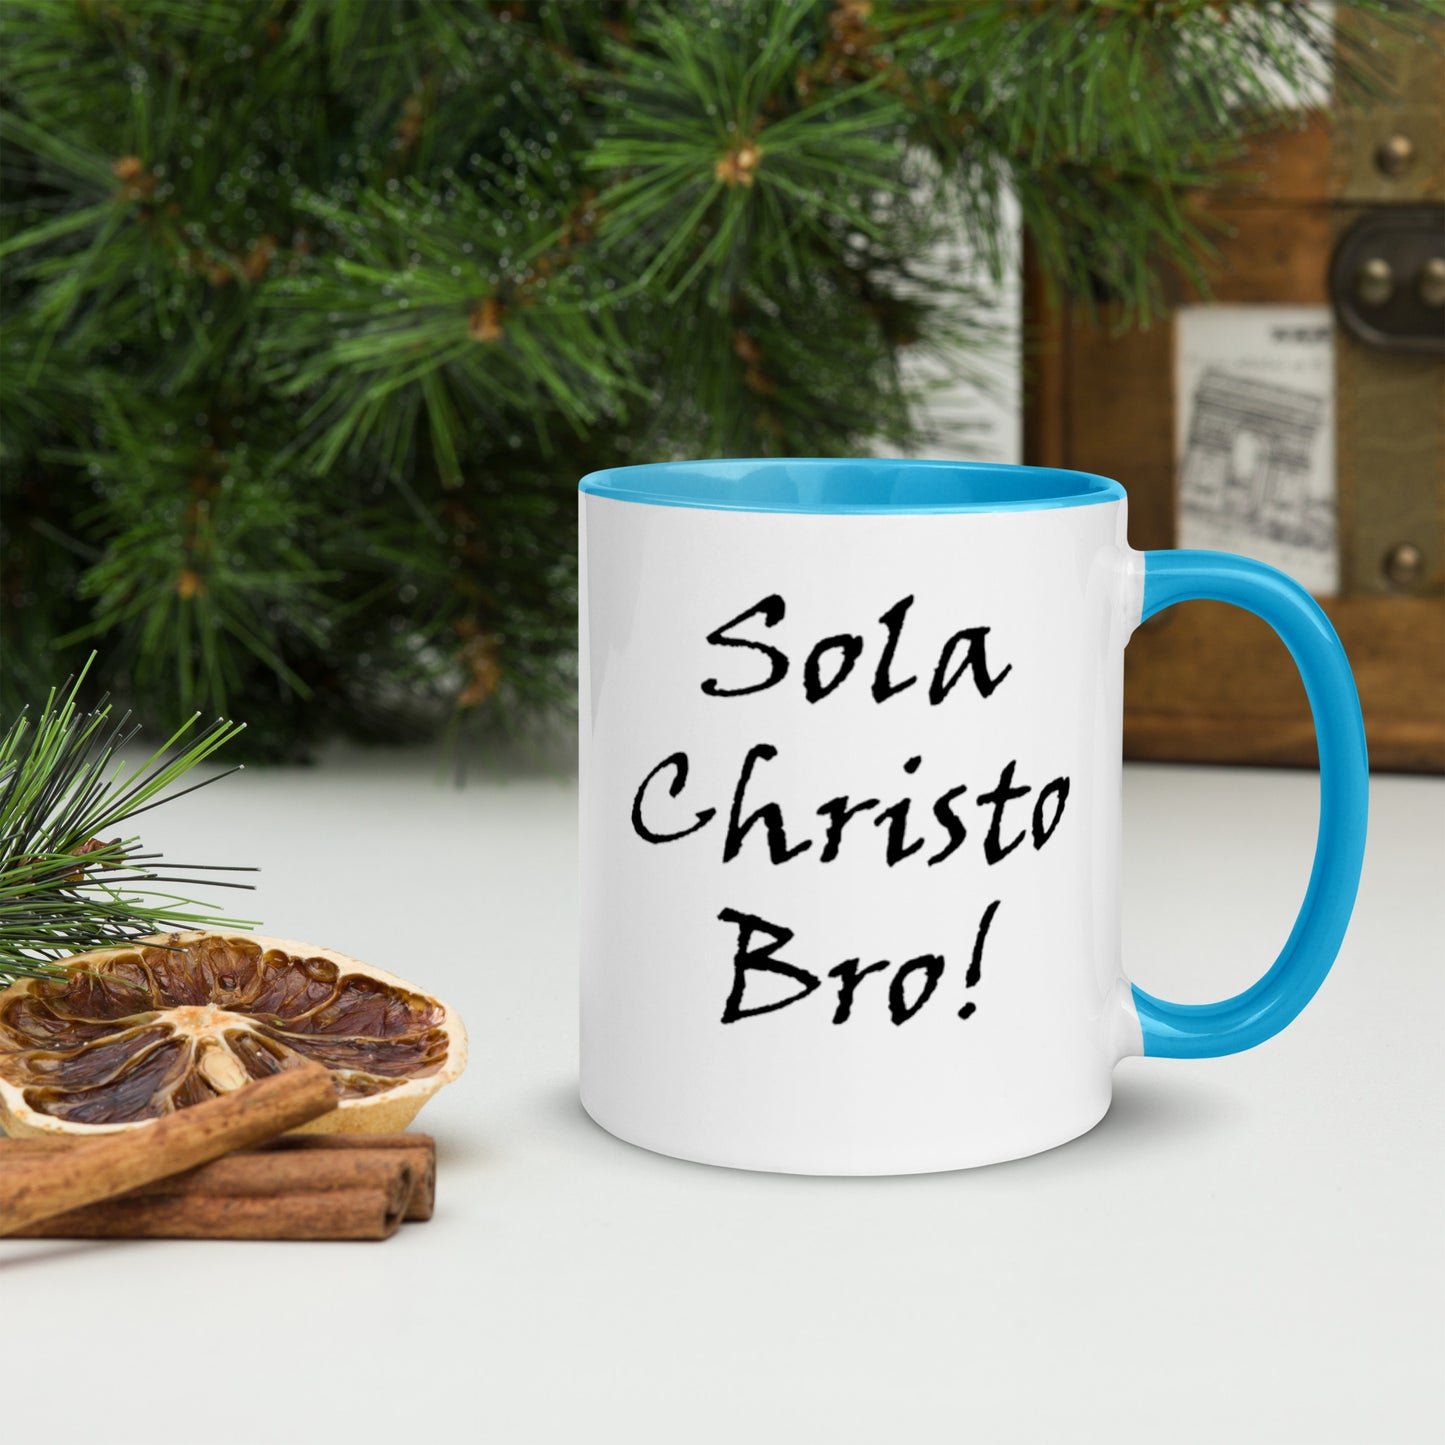 Sola Christo Bro! White Mug w/ Color - Solid Rock Designs | Christian Apparel